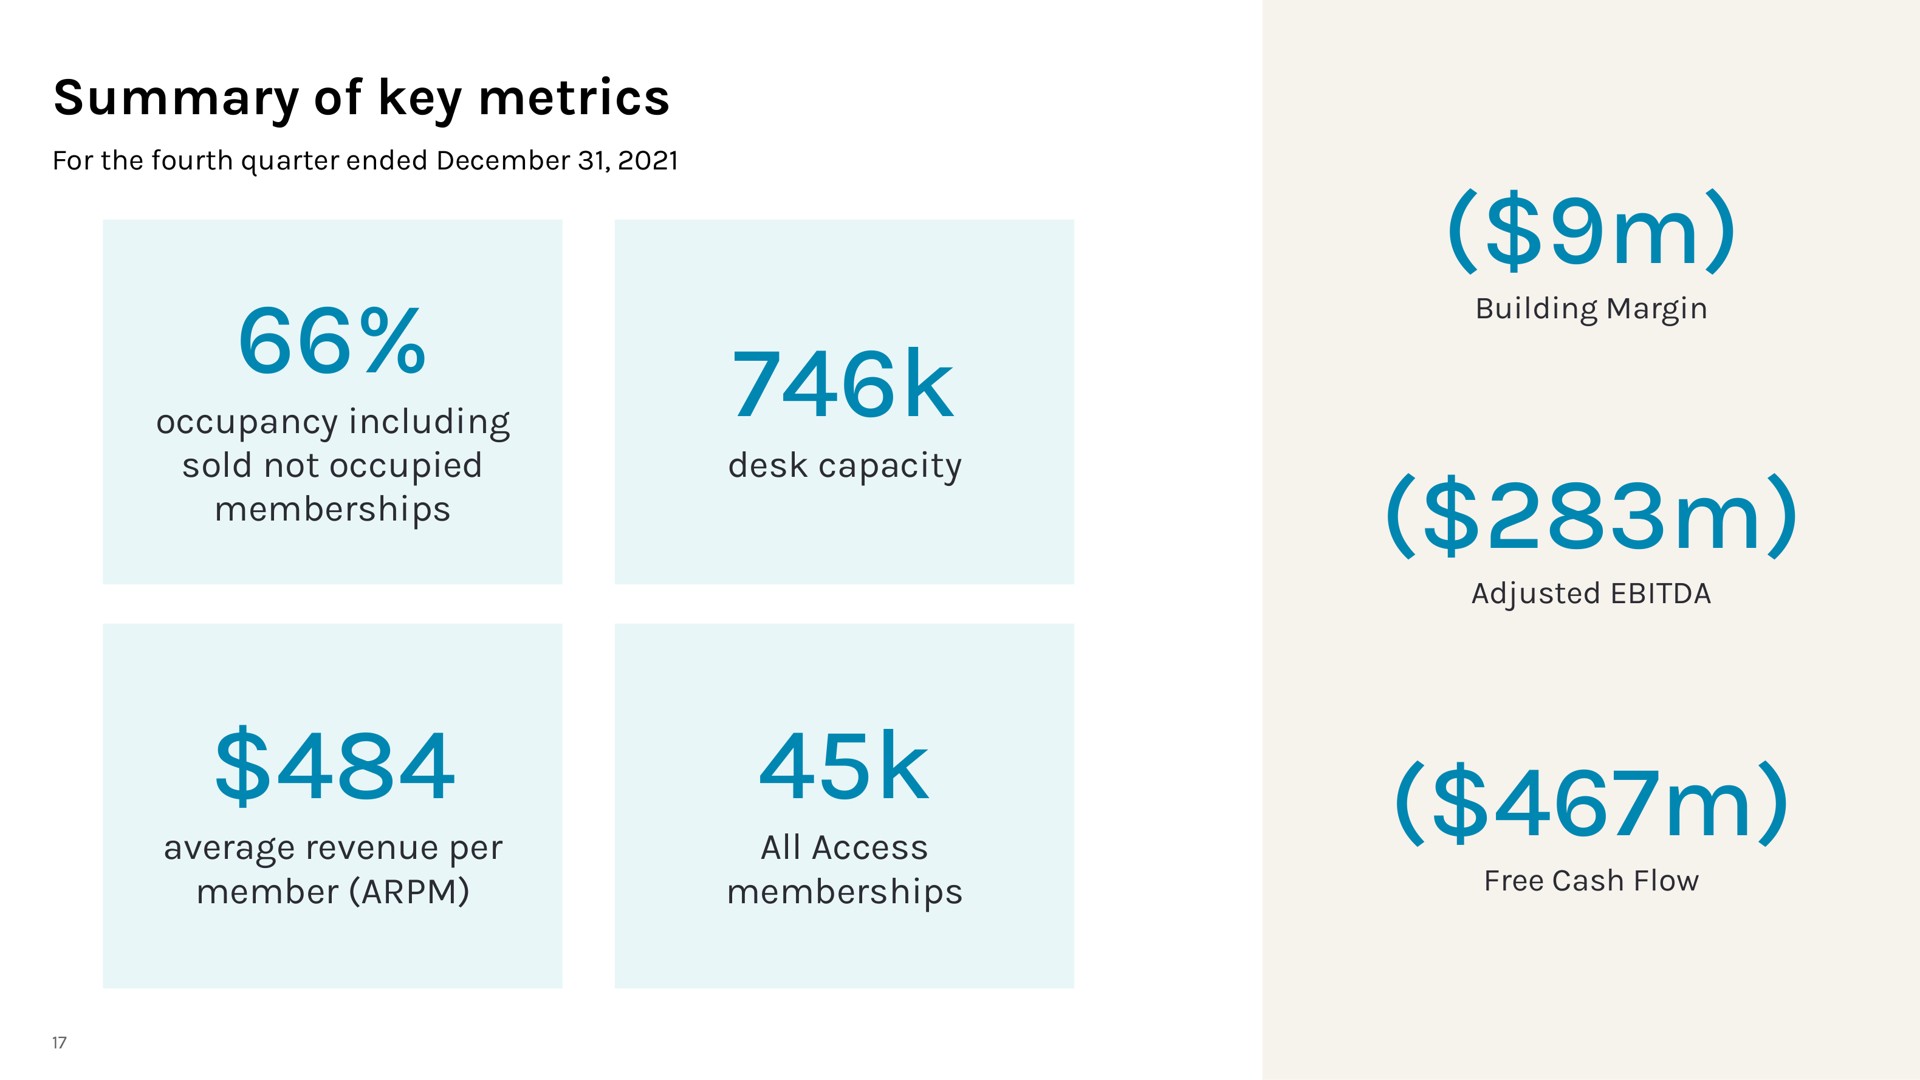 summary of key metrics occupancy including sold not occupied memberships desk capacity average revenue per member all access memberships | WeWork